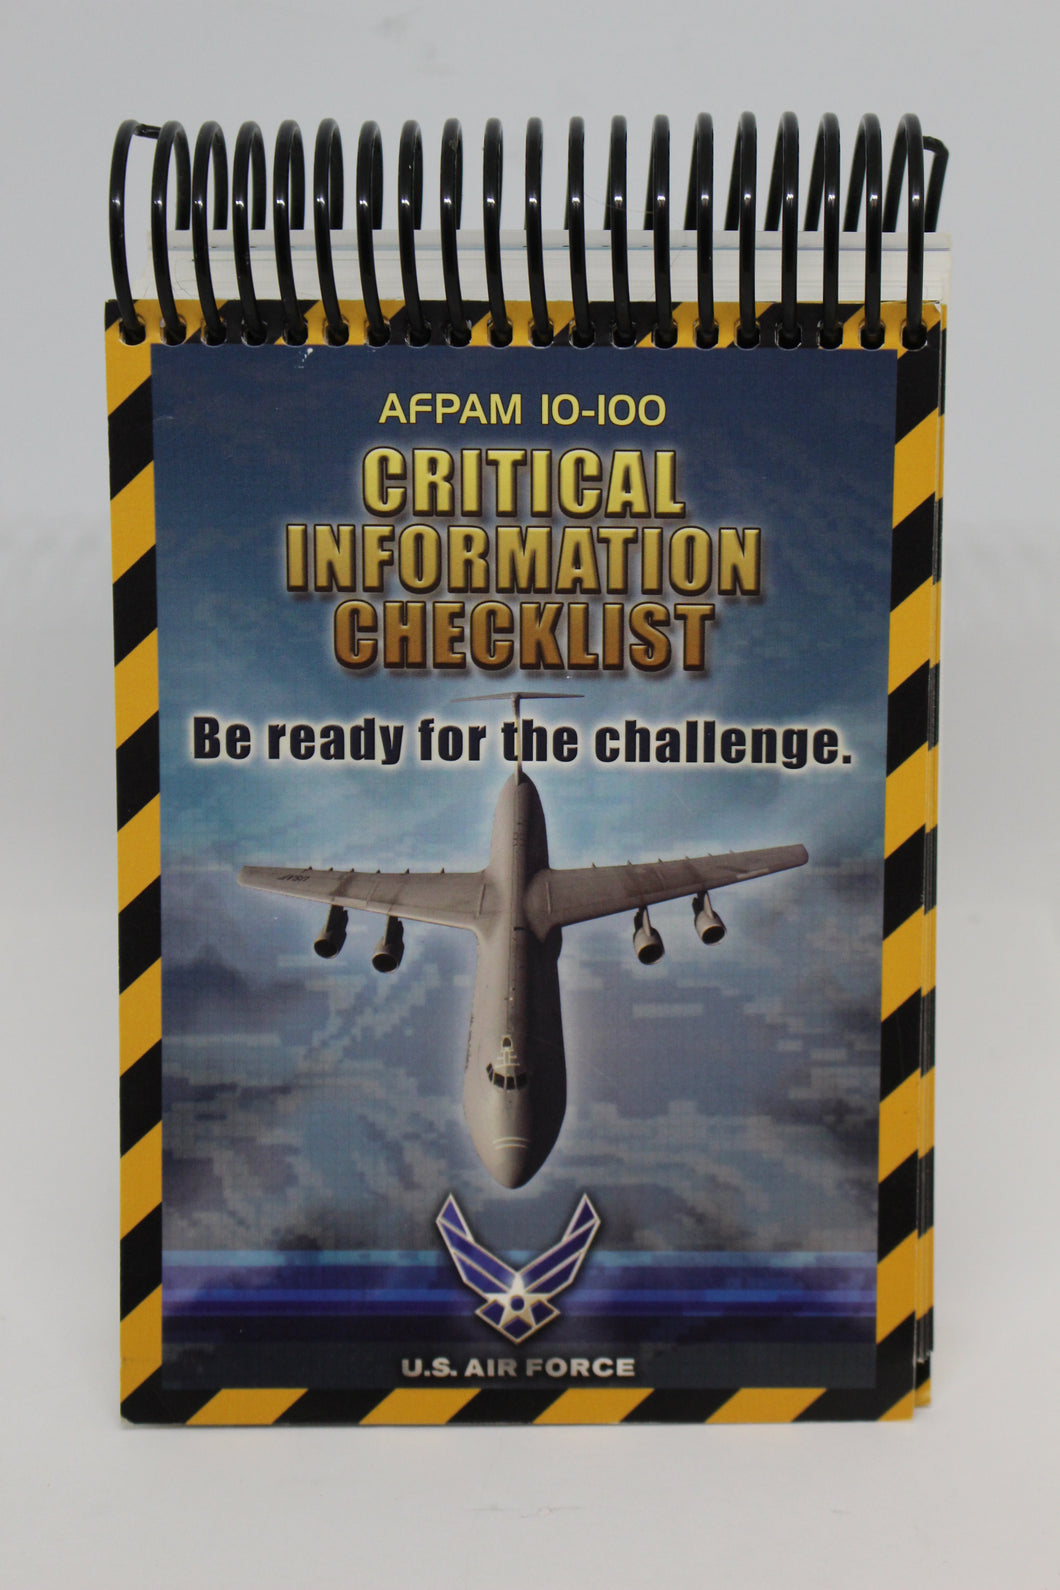 US Military AFPAM 10-100 Airman's Manuel, Critical Information Checklist, June 2004